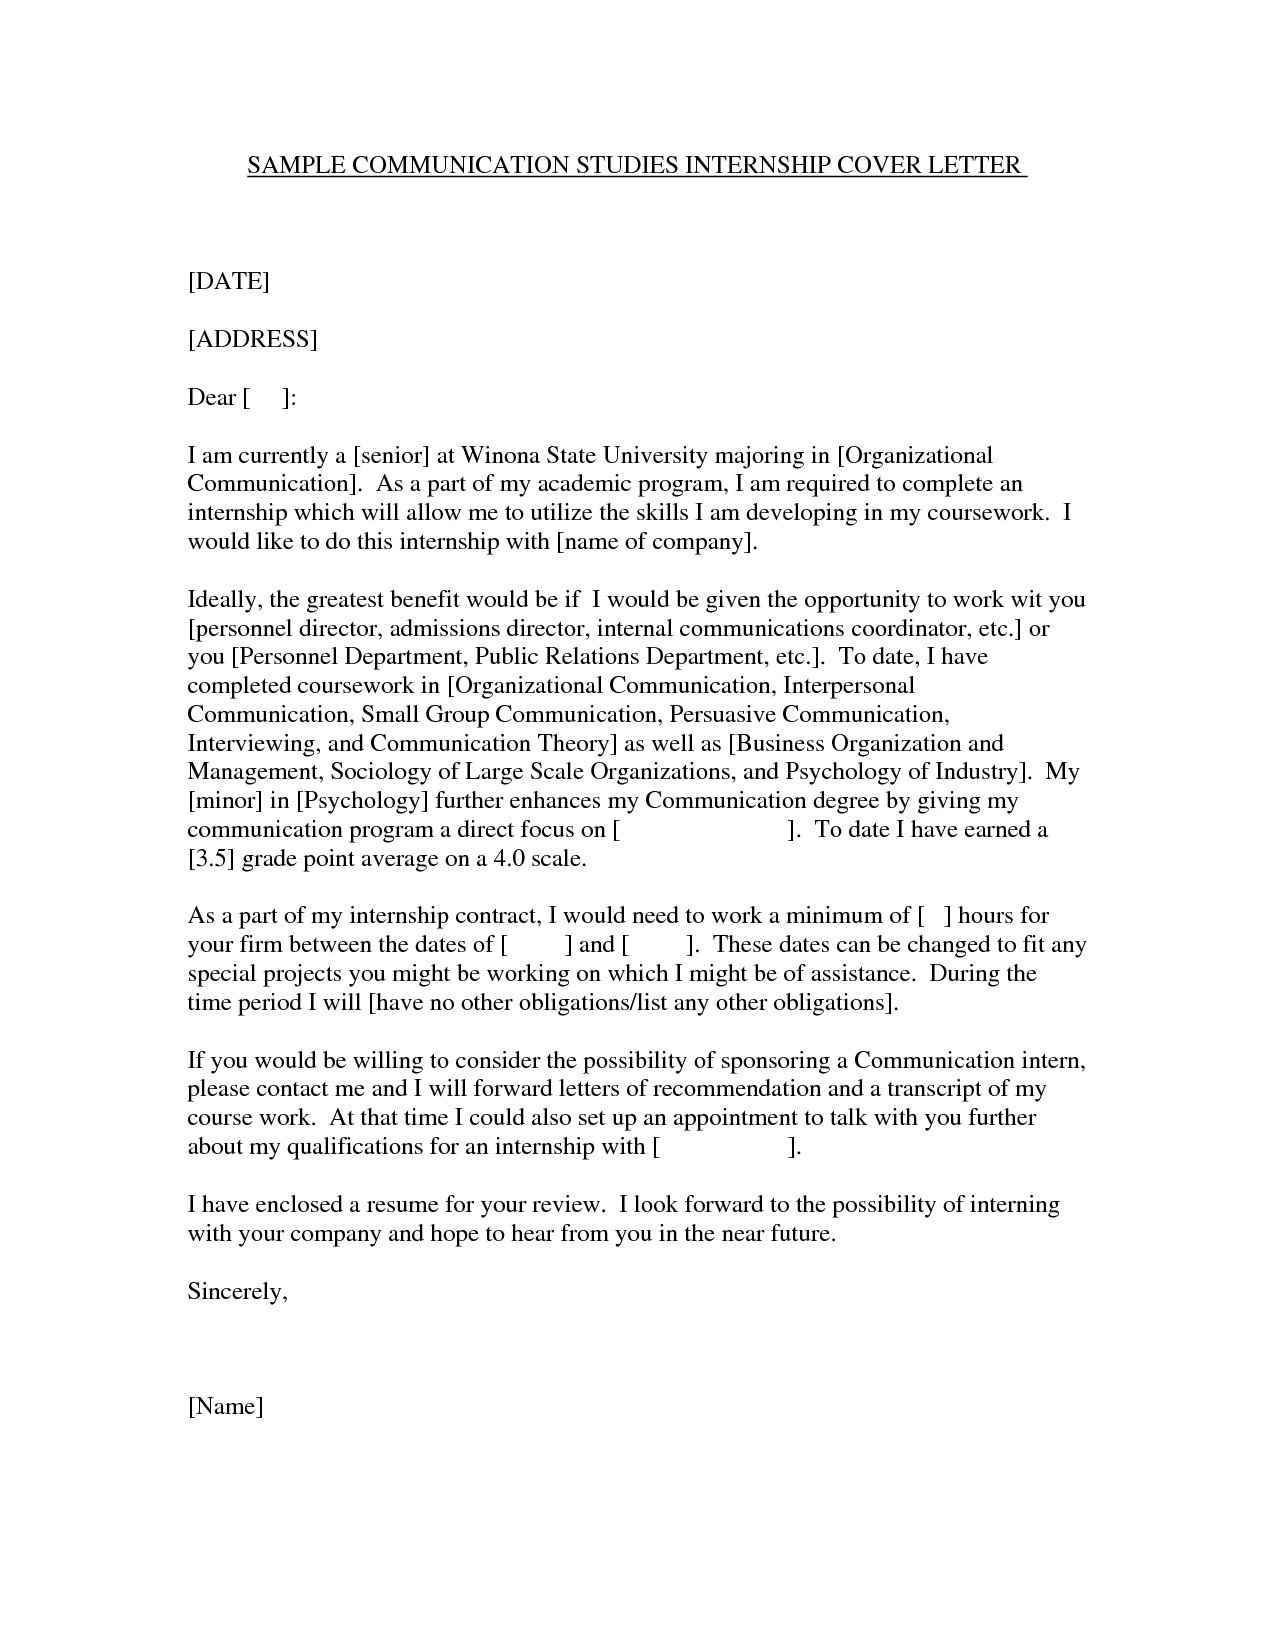 public relations internship cover letter